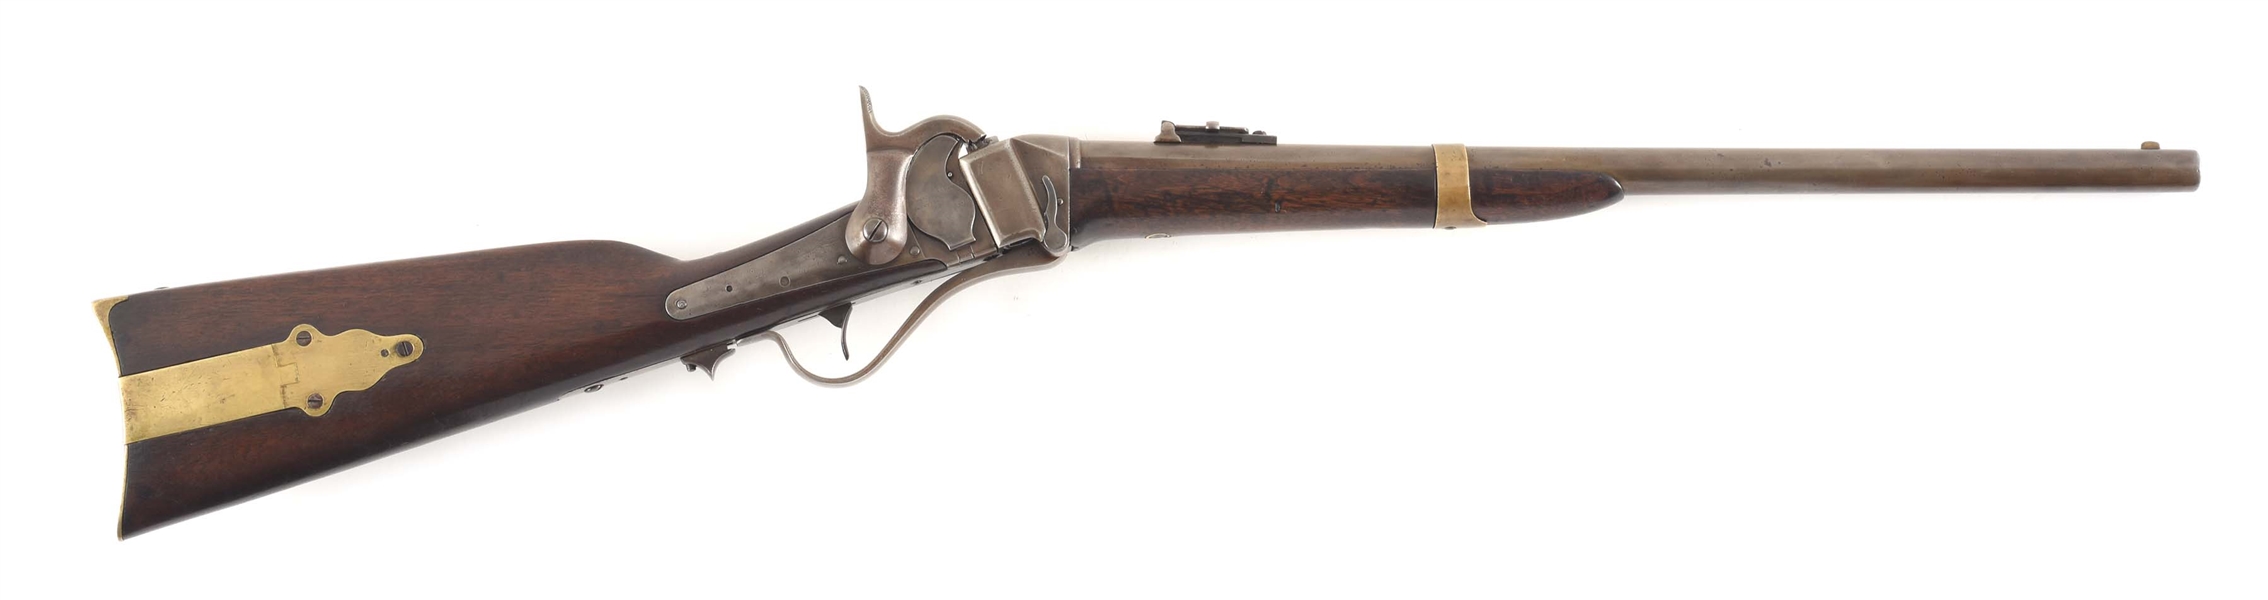 (A) SHARPS MODEL 1855 SINGLE SHOT RIFLE WITH MAYNARD TAPE PRIMING SYSTEM.